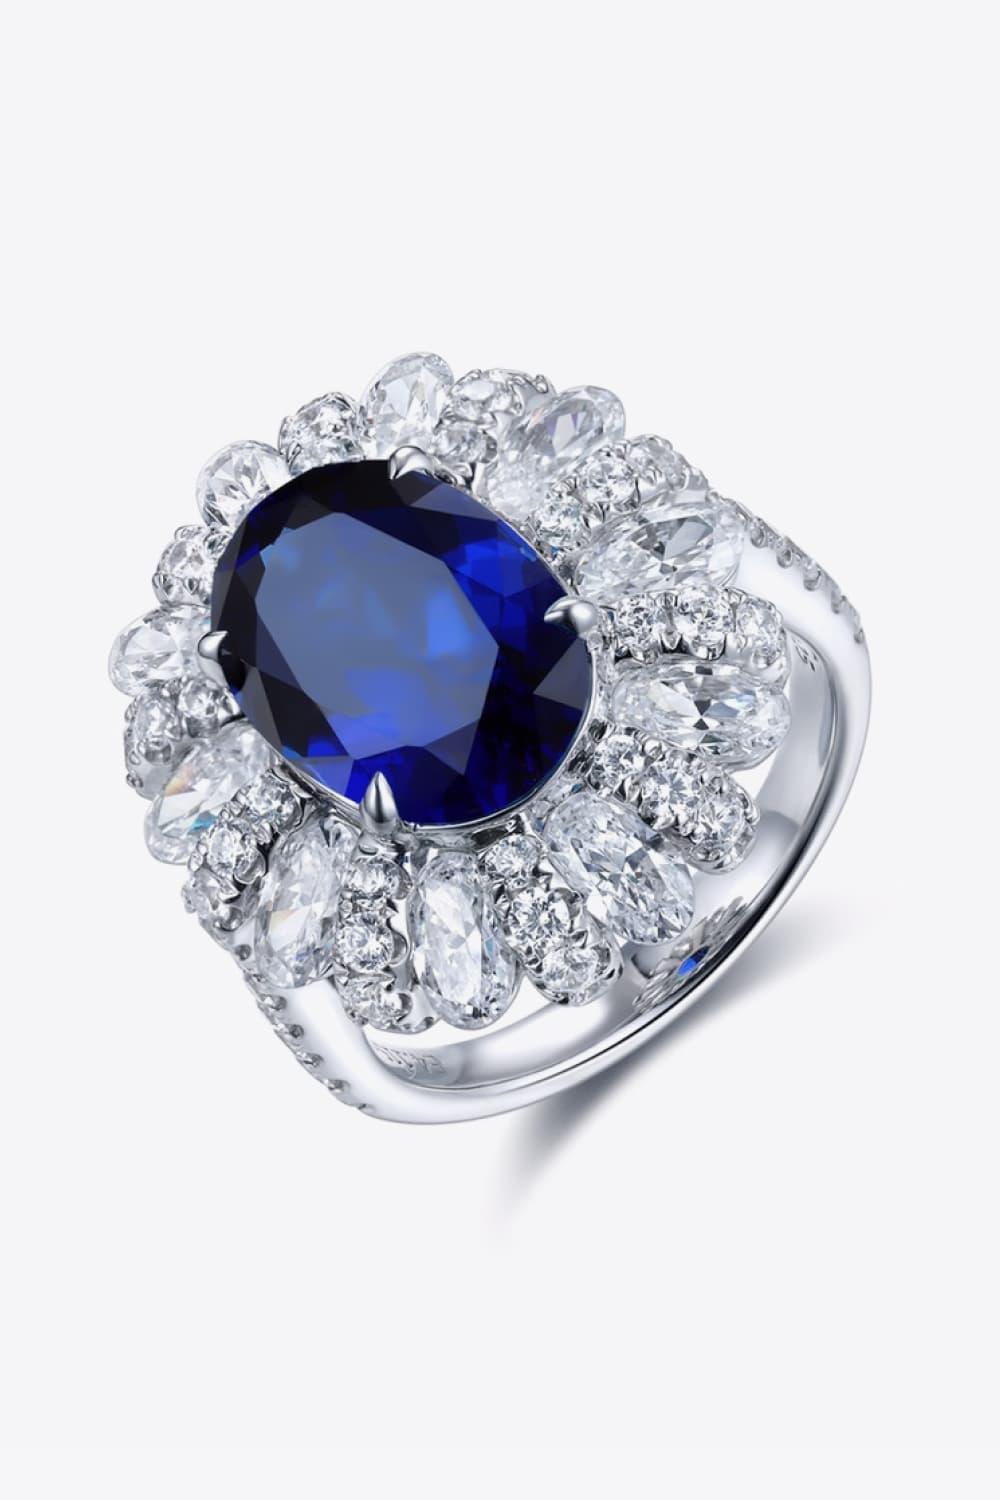 Get Surprised 5 Carat Lab-Grown Sapphire Flower Ring - MXSTUDIO.COM